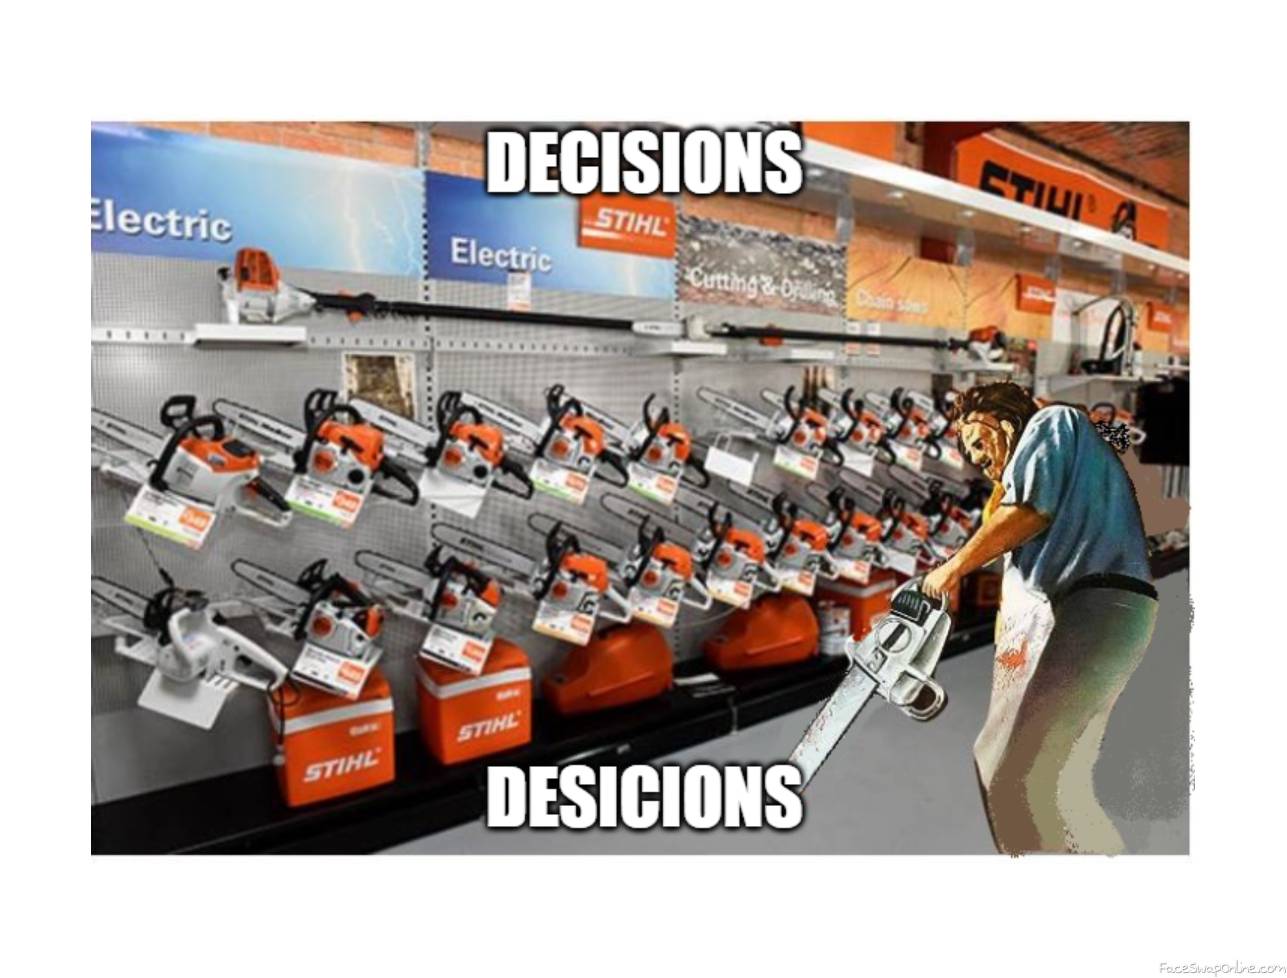 Decisions decisions